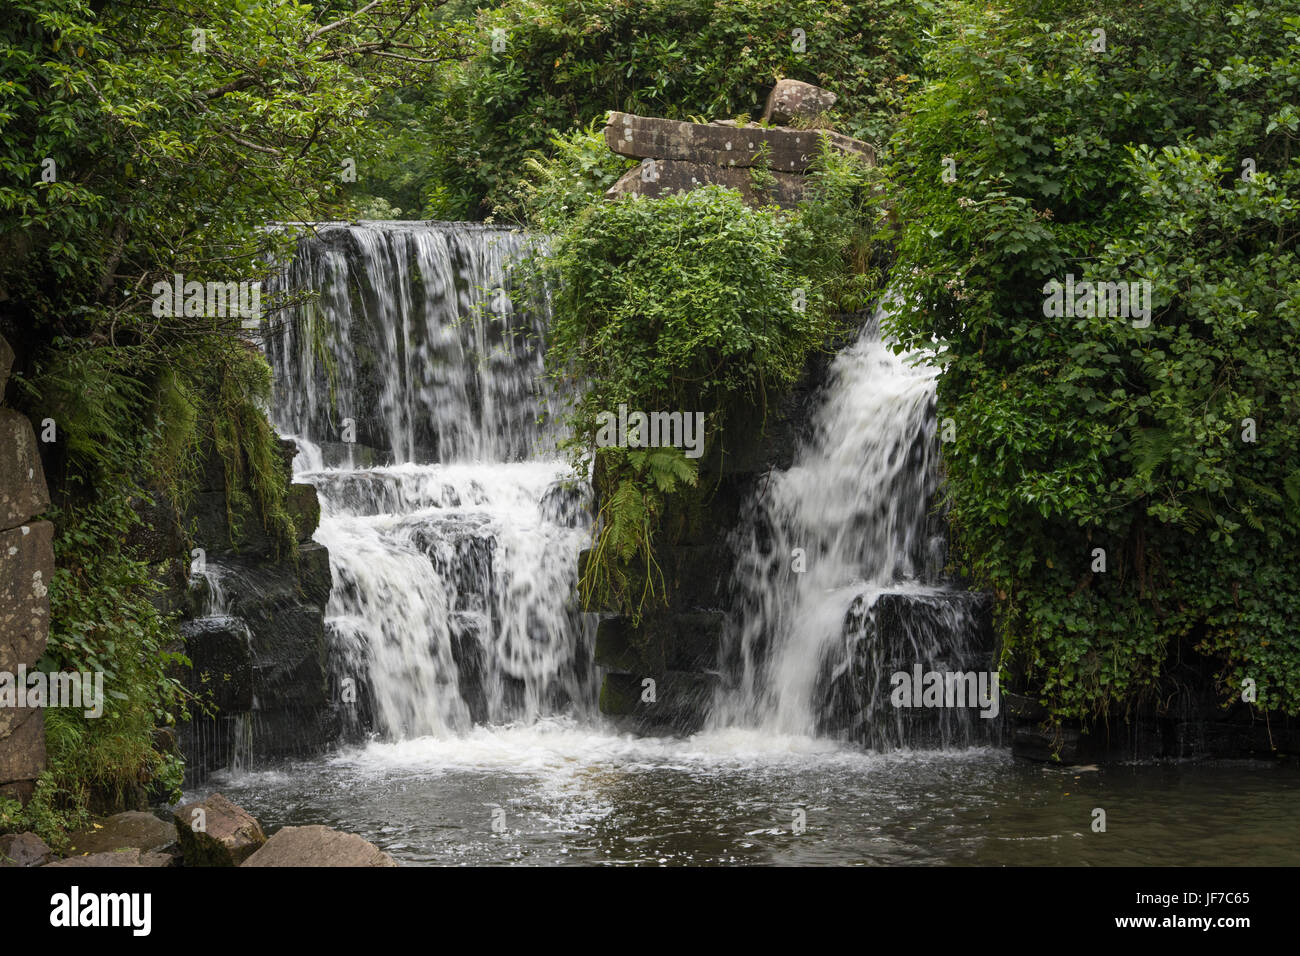 'Hidden Waterfall' in Penllergare Valley Woods, Swansea, Wales Stock Photo